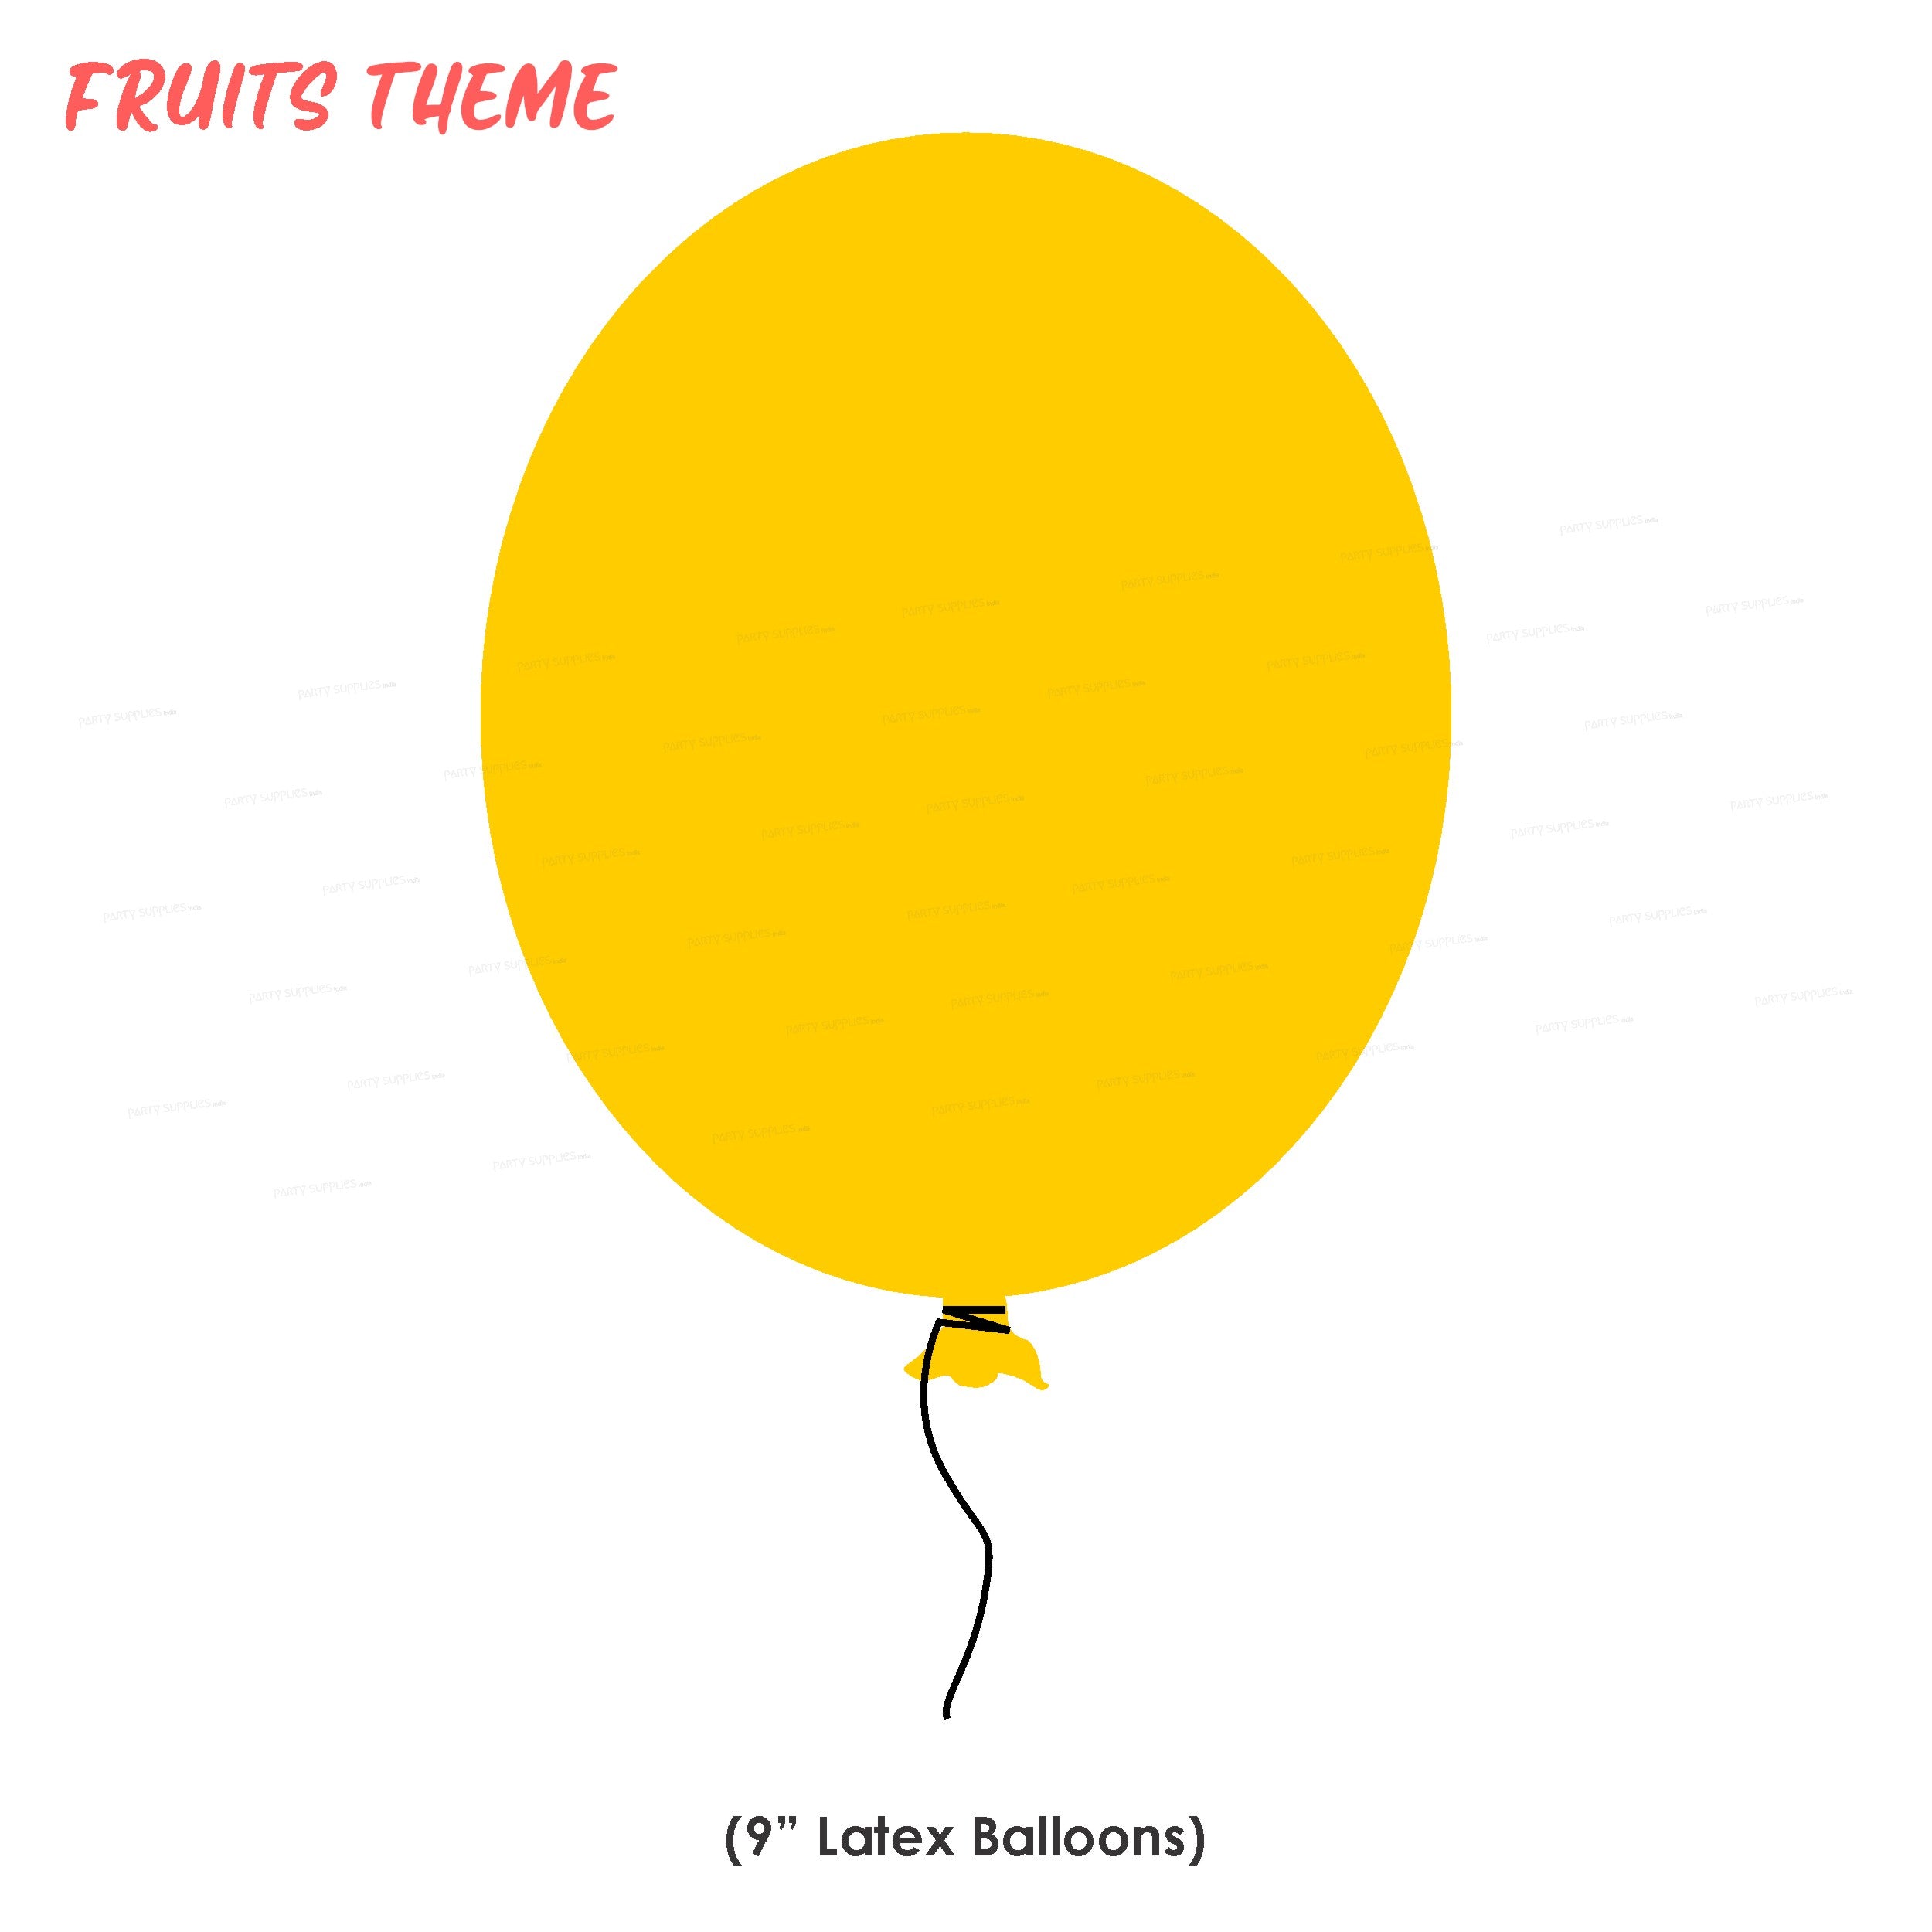 PSI Fruits Theme Colour 60 Pcs. Balloons